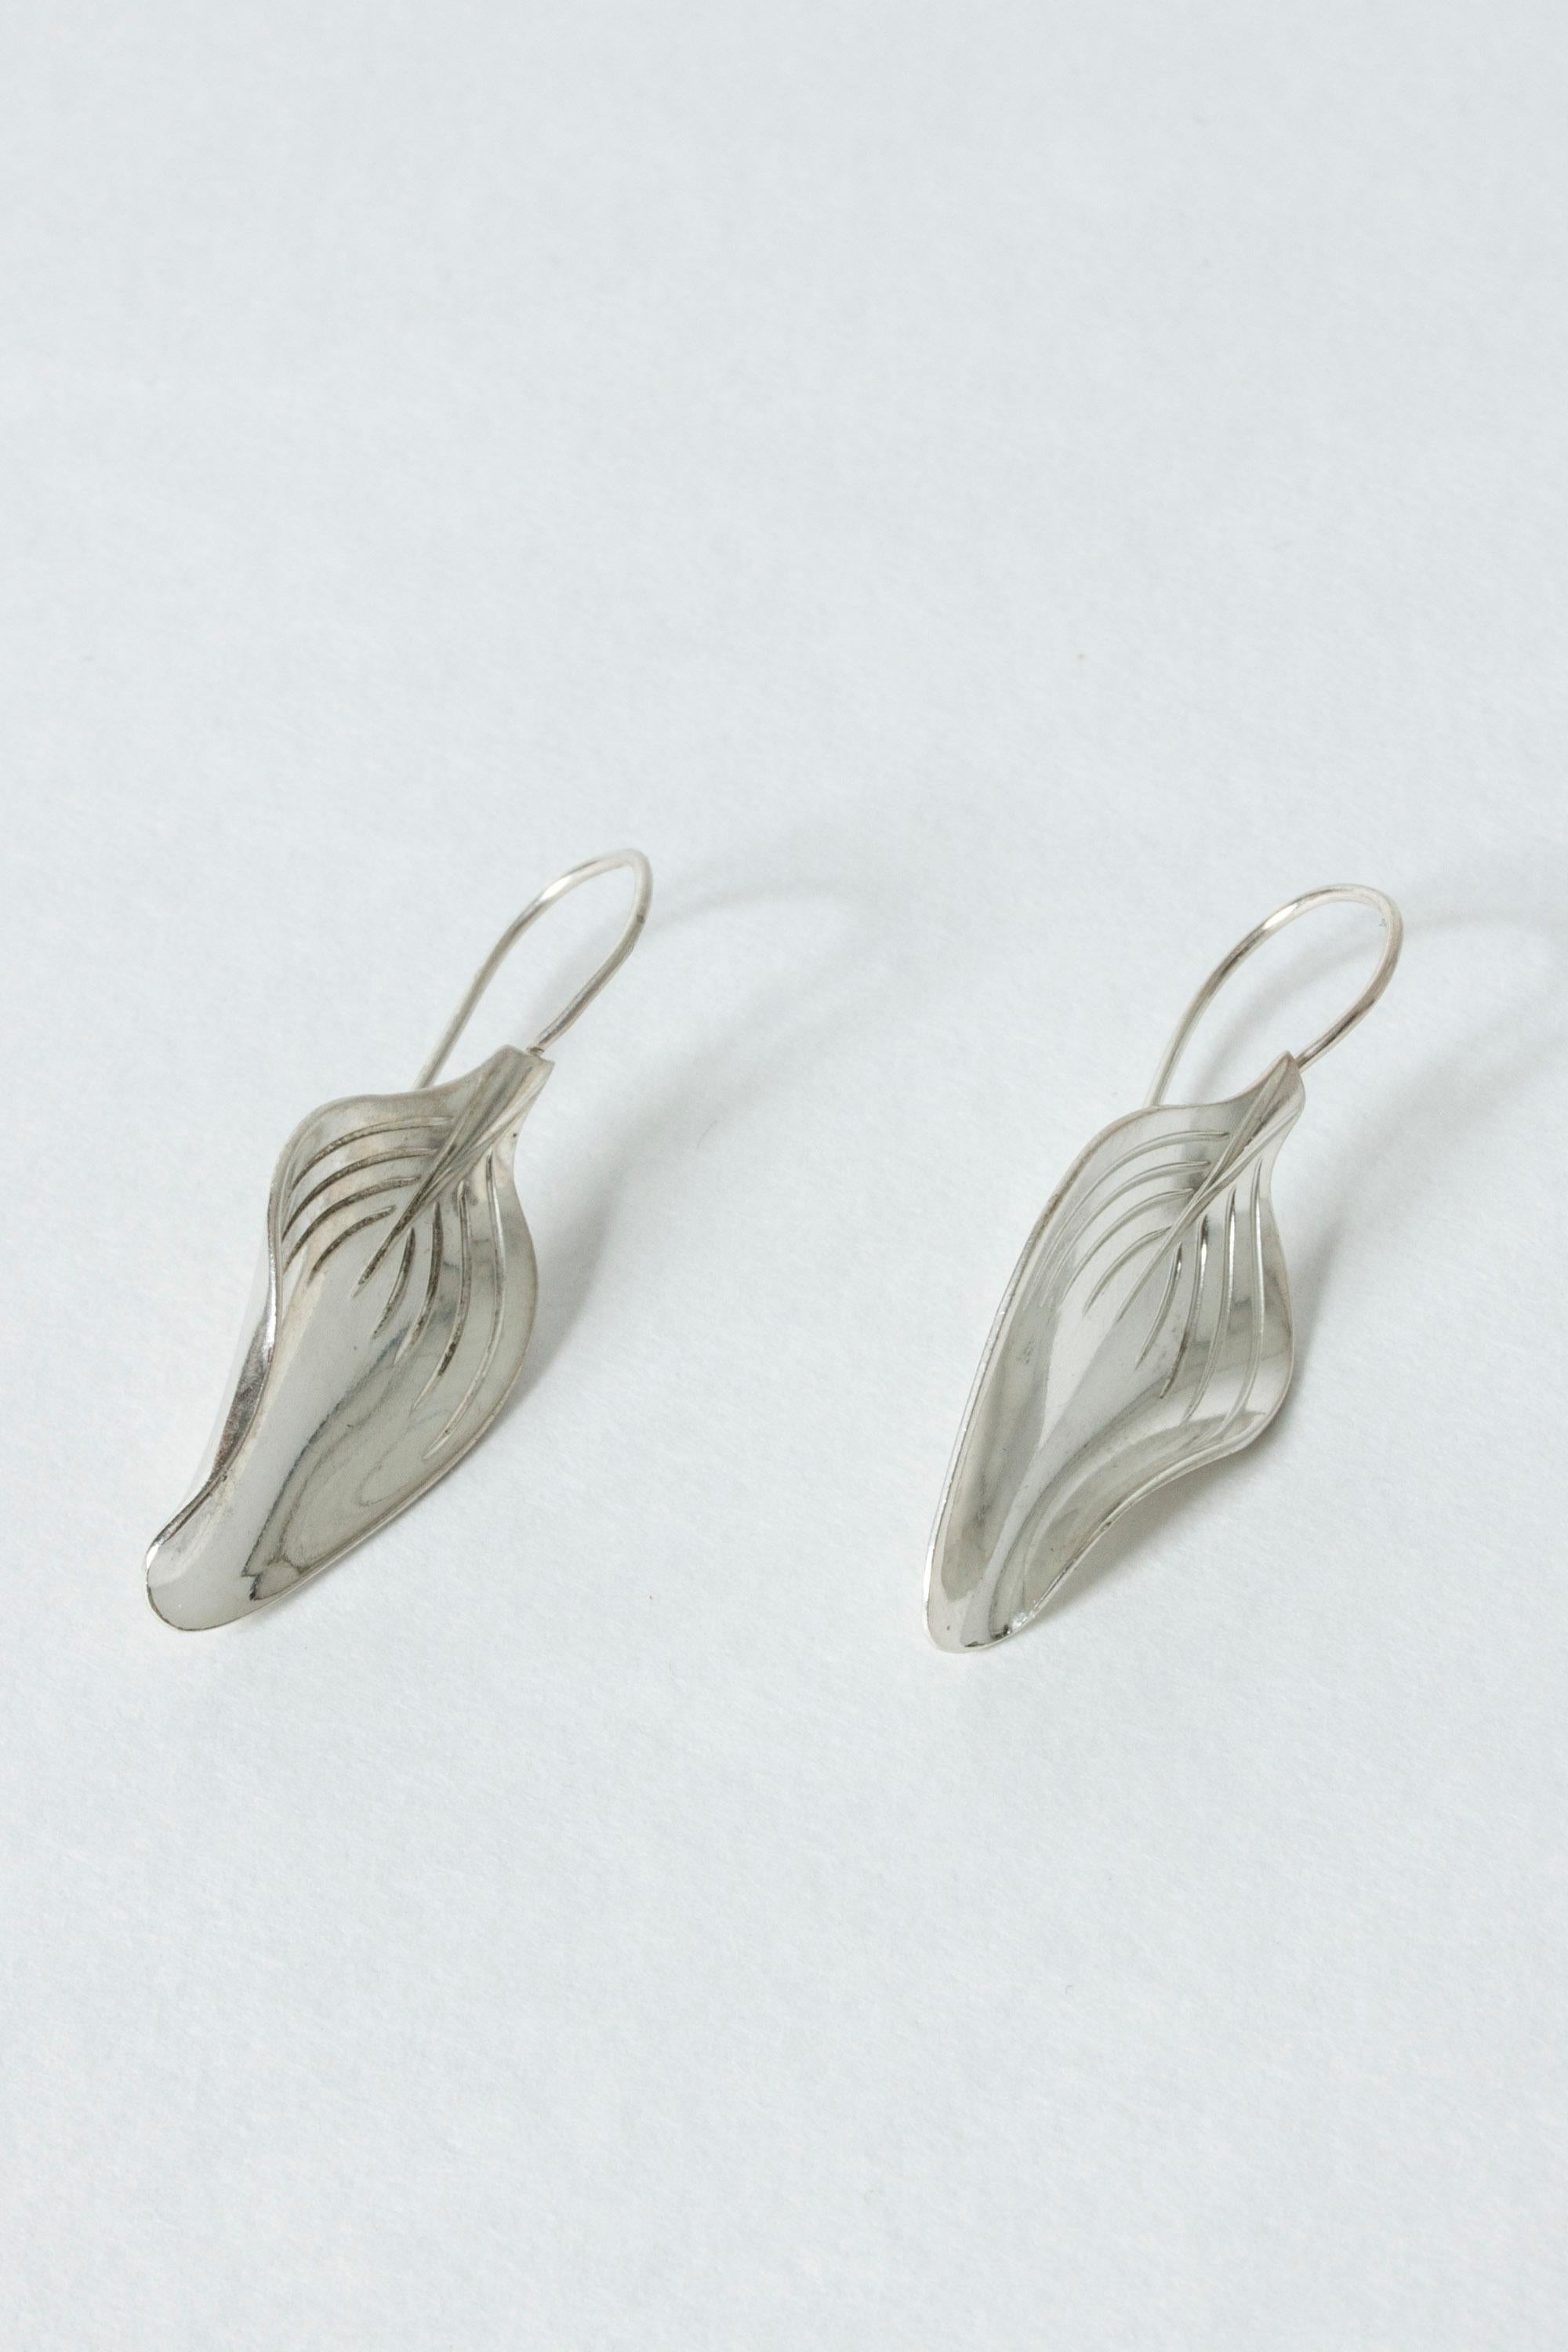 Pair of Silver Earrings by Viggo Wollny, Denmark, 1950s 1